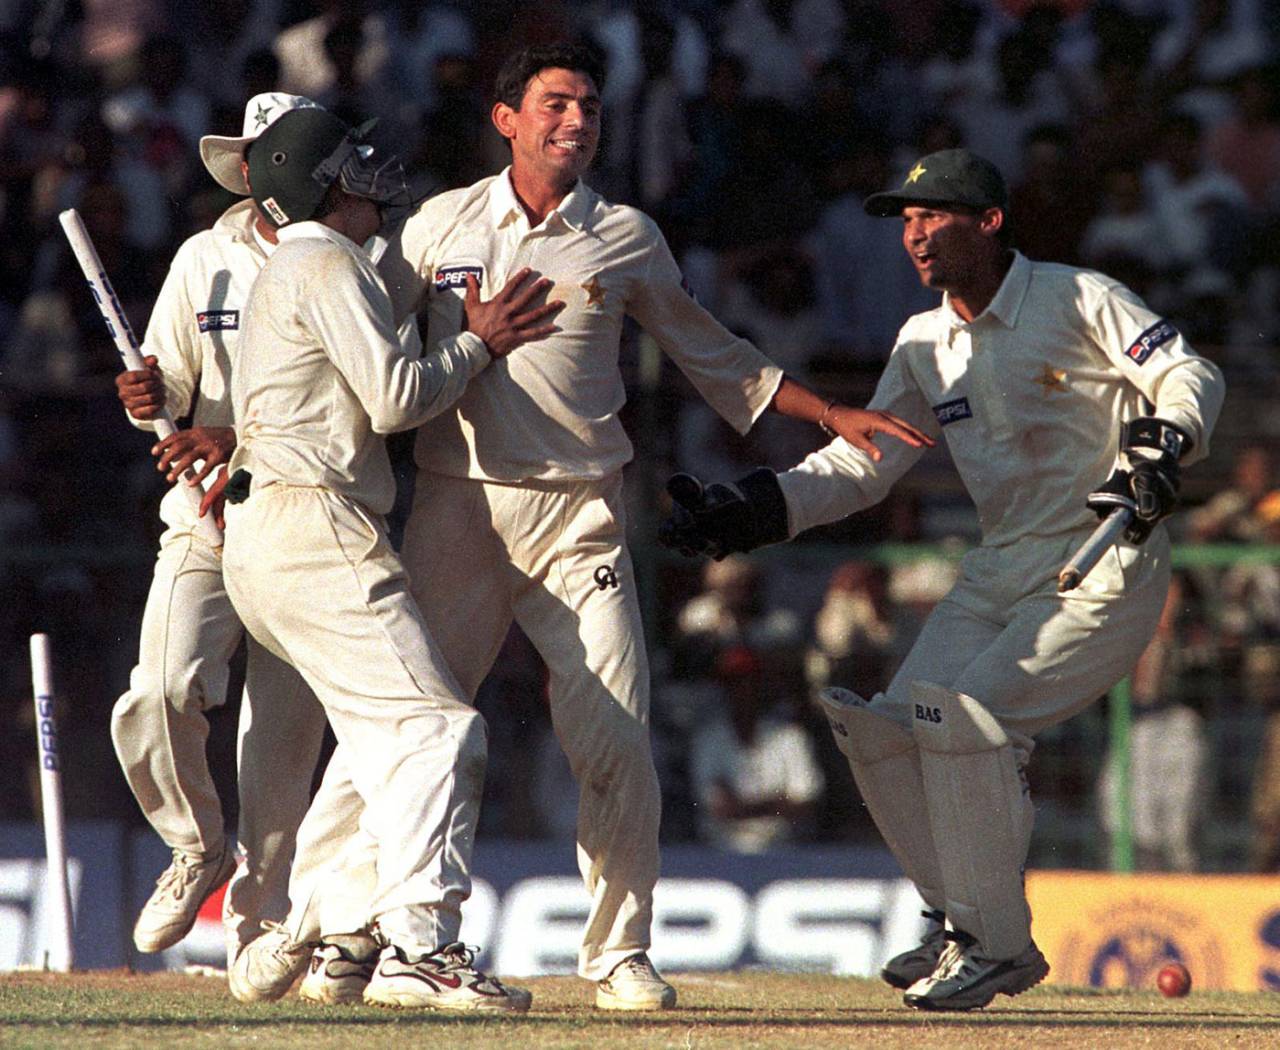 Saqlain Mushtaq celebrates the dismissal of the final Indian batsman - Javagal Srinath, India v Pakistan, Chennai, 4th day, January 31, 1999